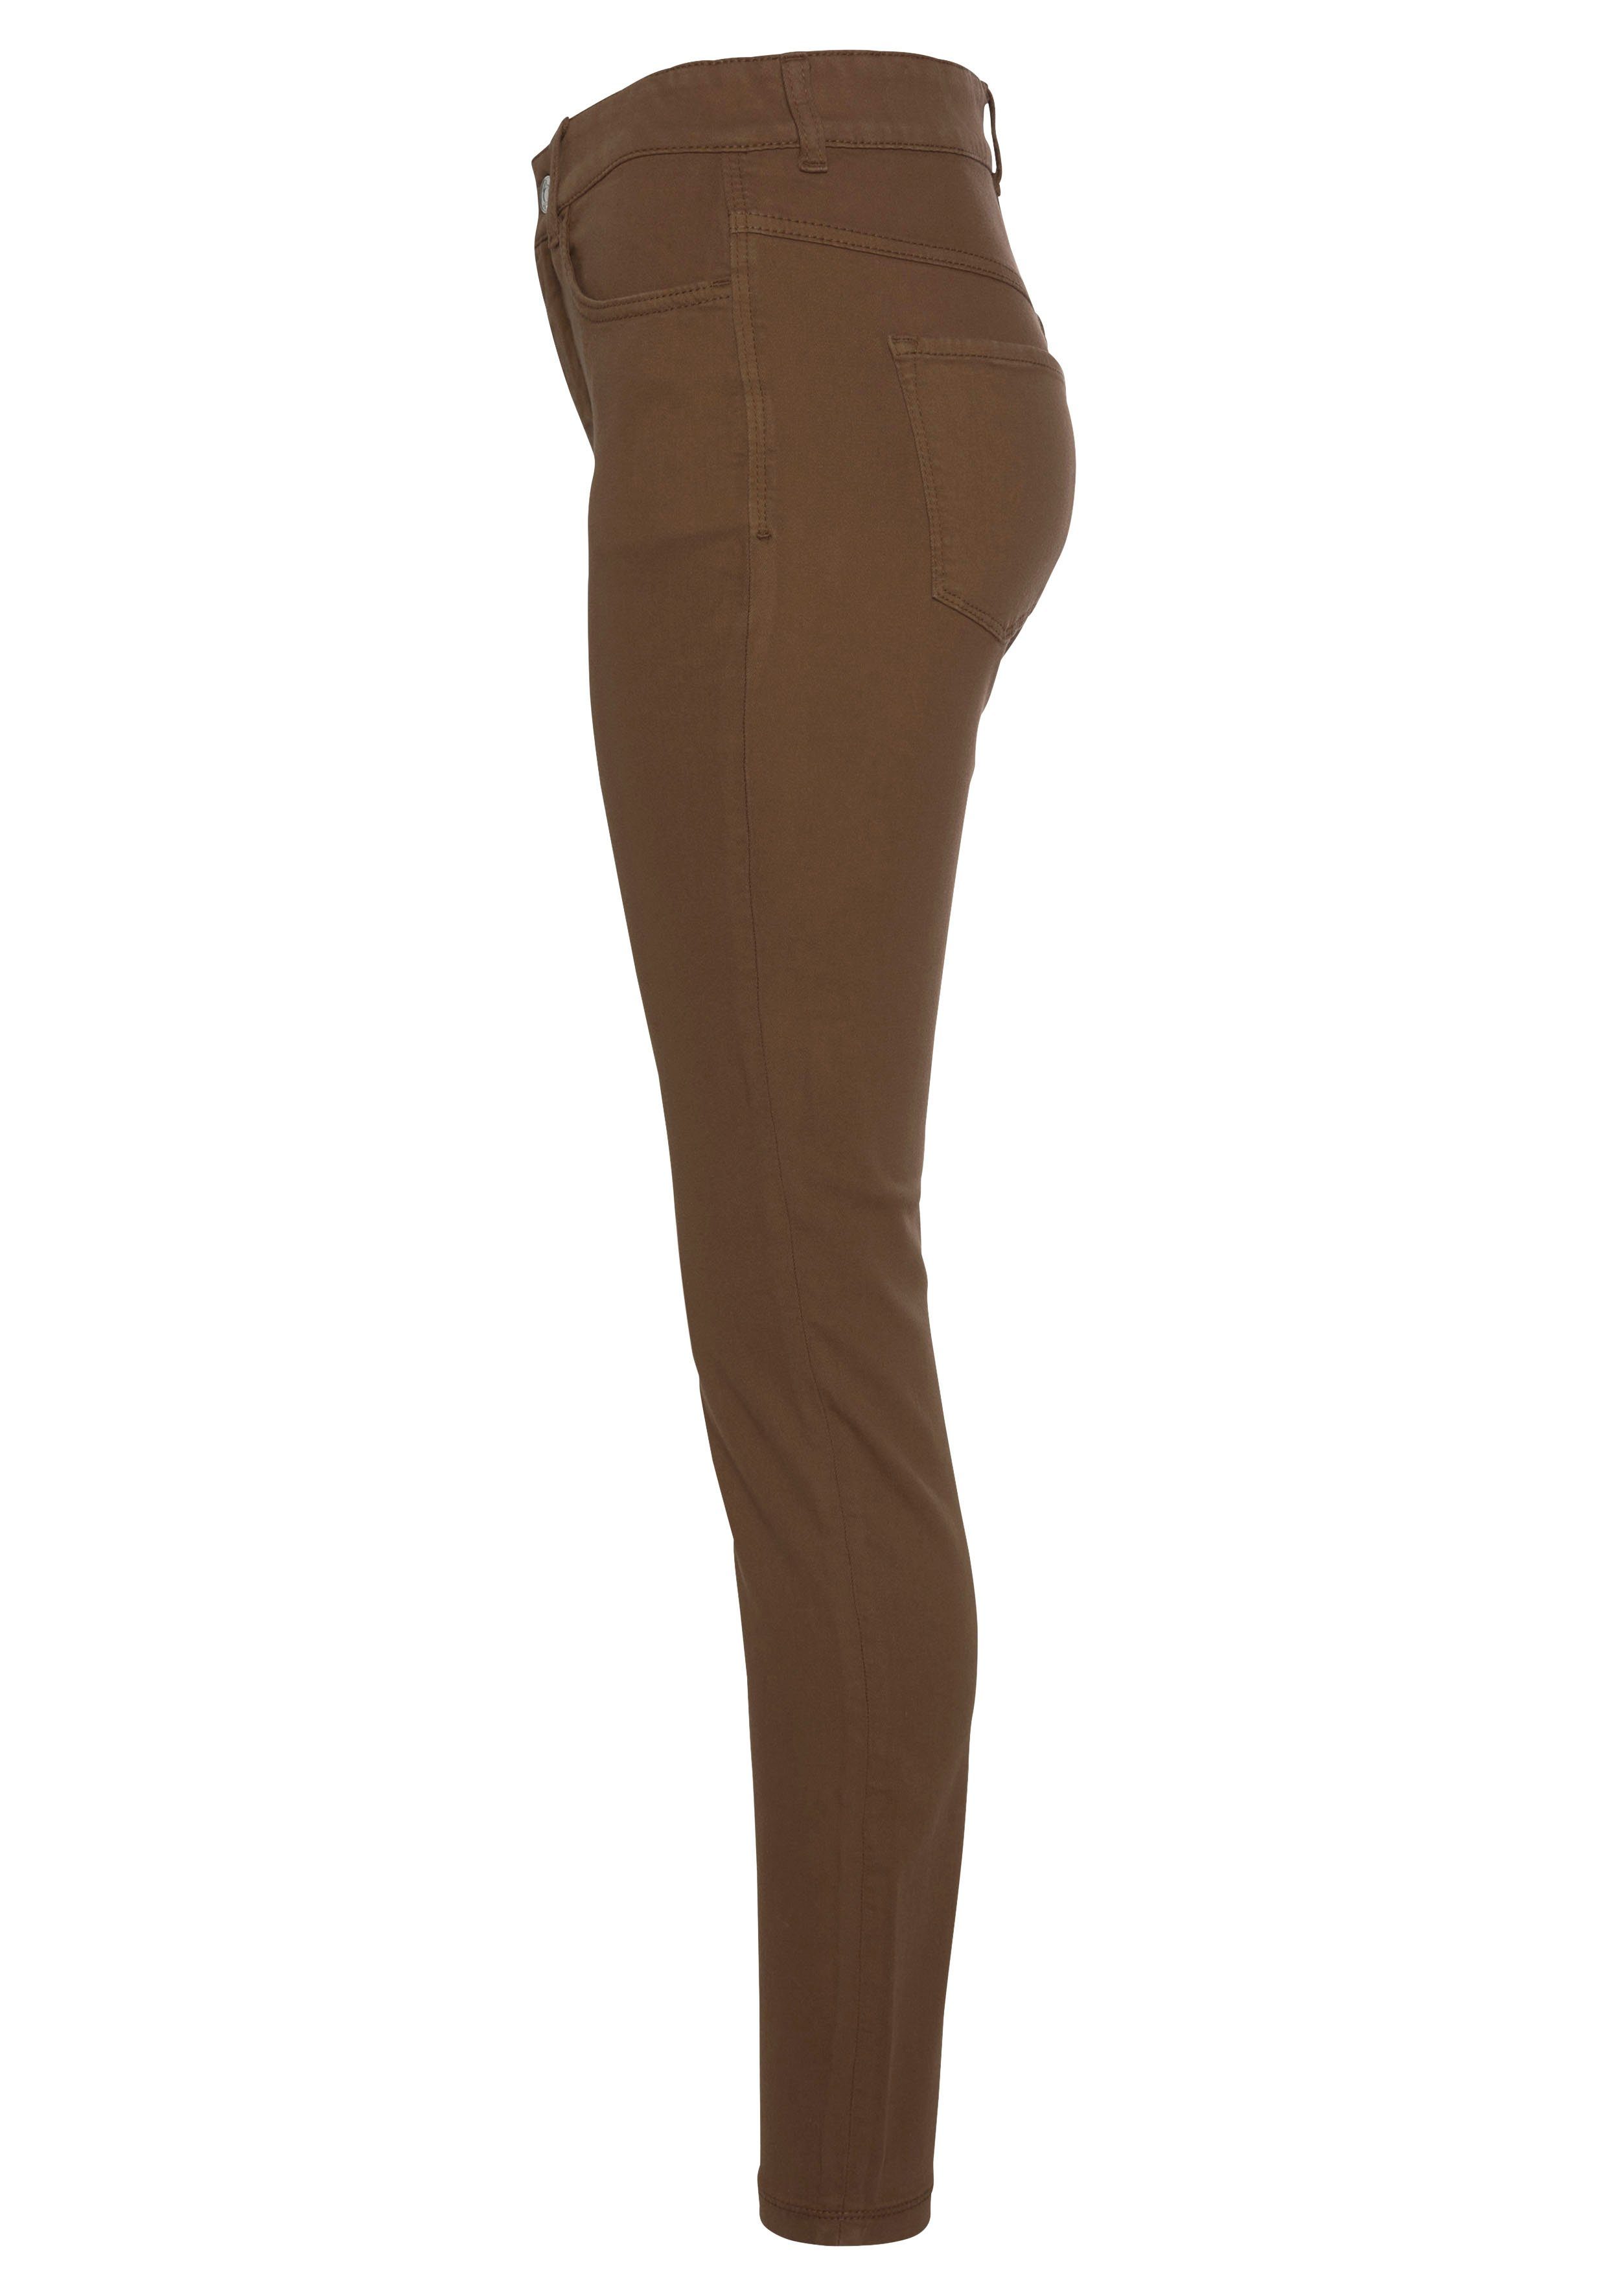 ganzen fawn MAC den Tag bequem brown Skinny-fit-Jeans Qualität sitzt Hiperstretch-Skinny Power-Stretch